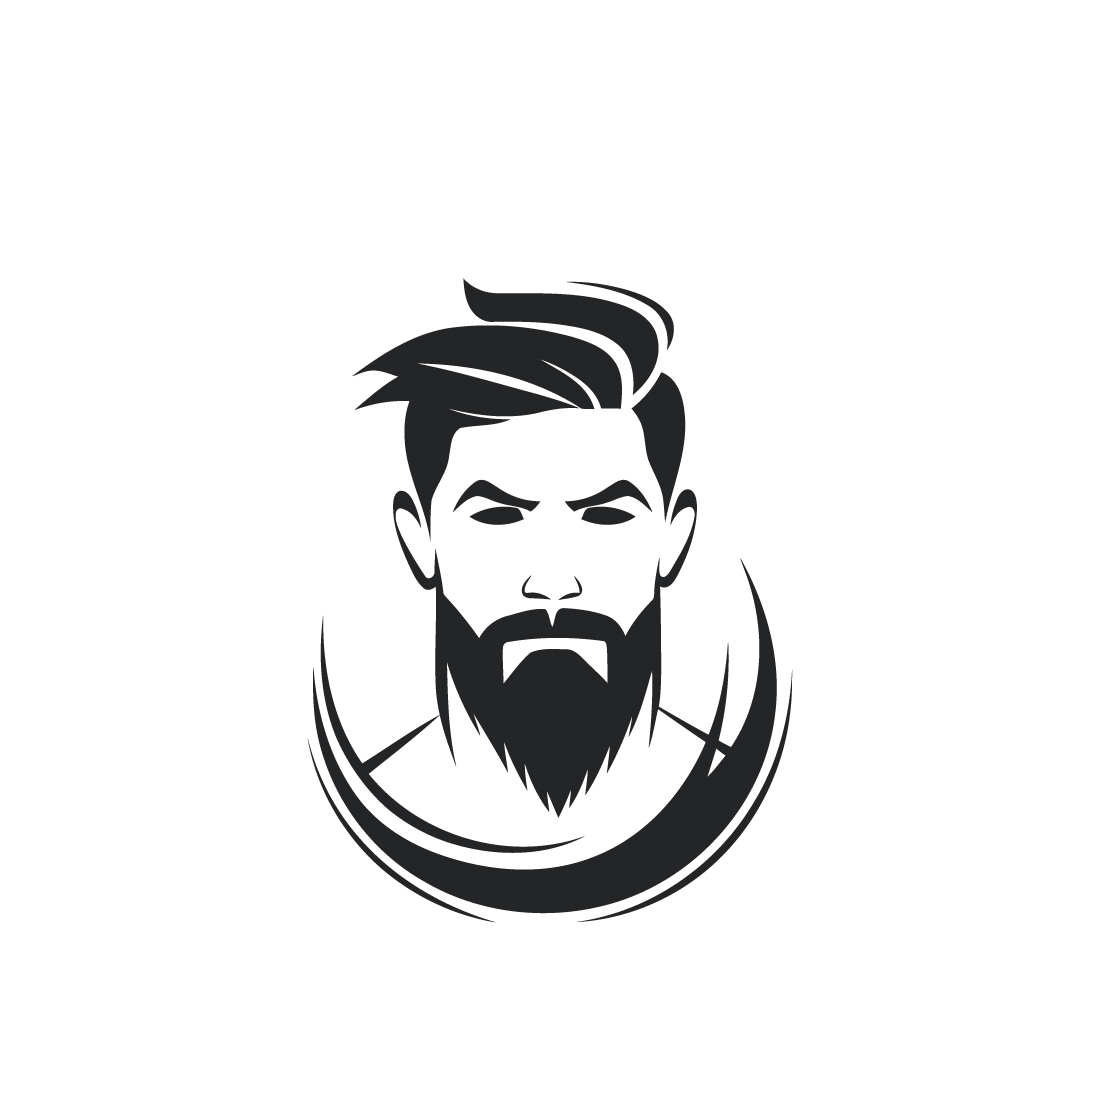 Fashion Men's Hair And Beard Logo Design Royalty Free SVG, Cliparts,  Vectors, and Stock Illustration. Image 143755762.